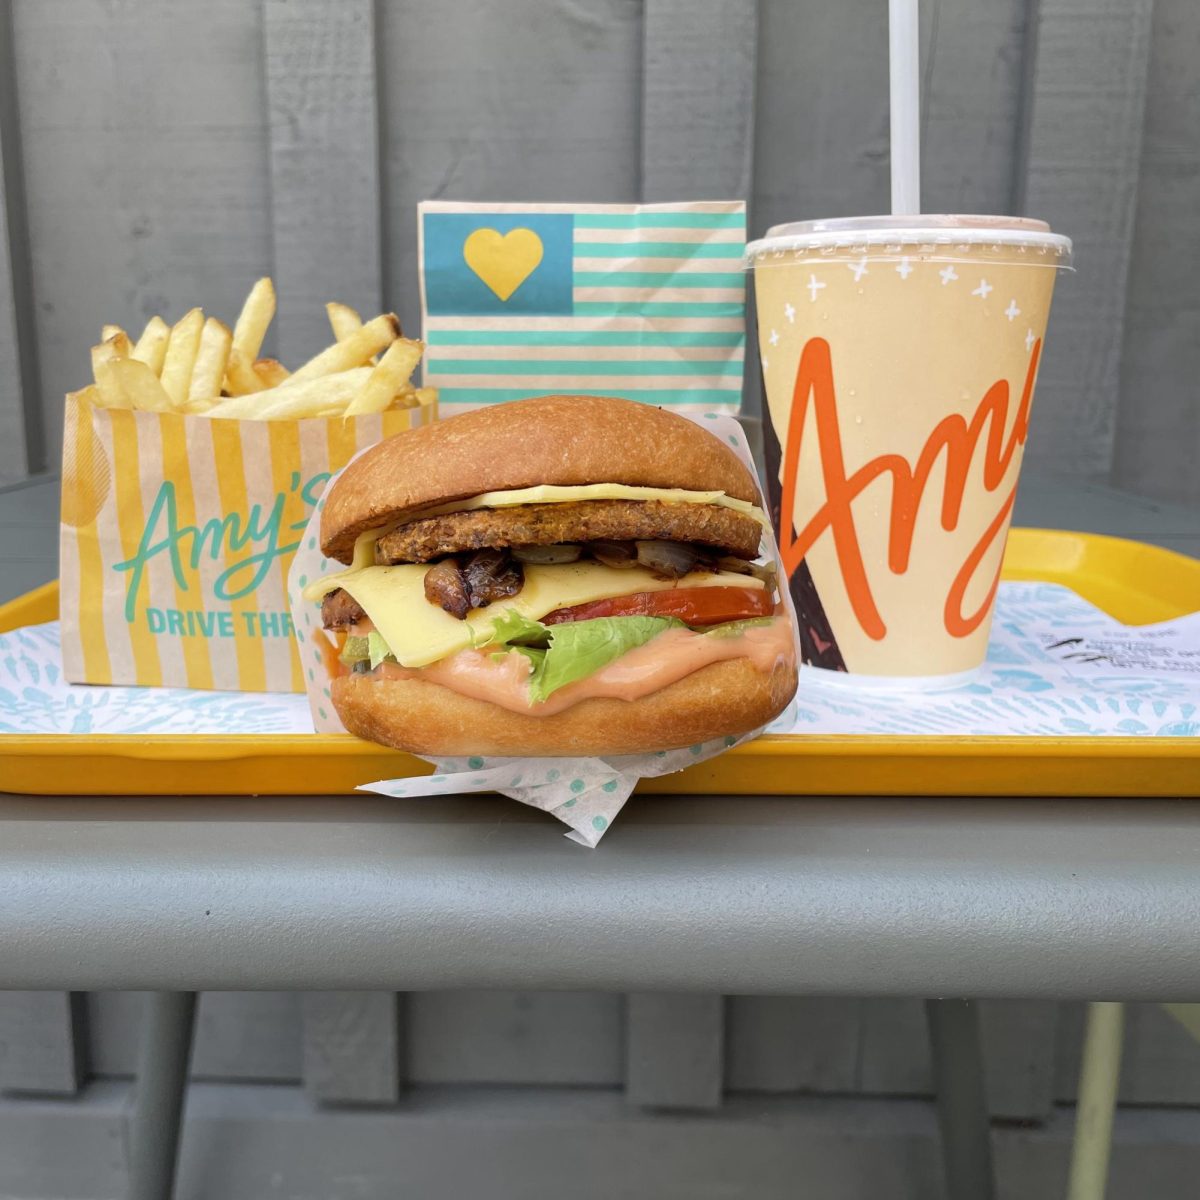 The Amy burger has a classic burger taste and a gluten free bun option.